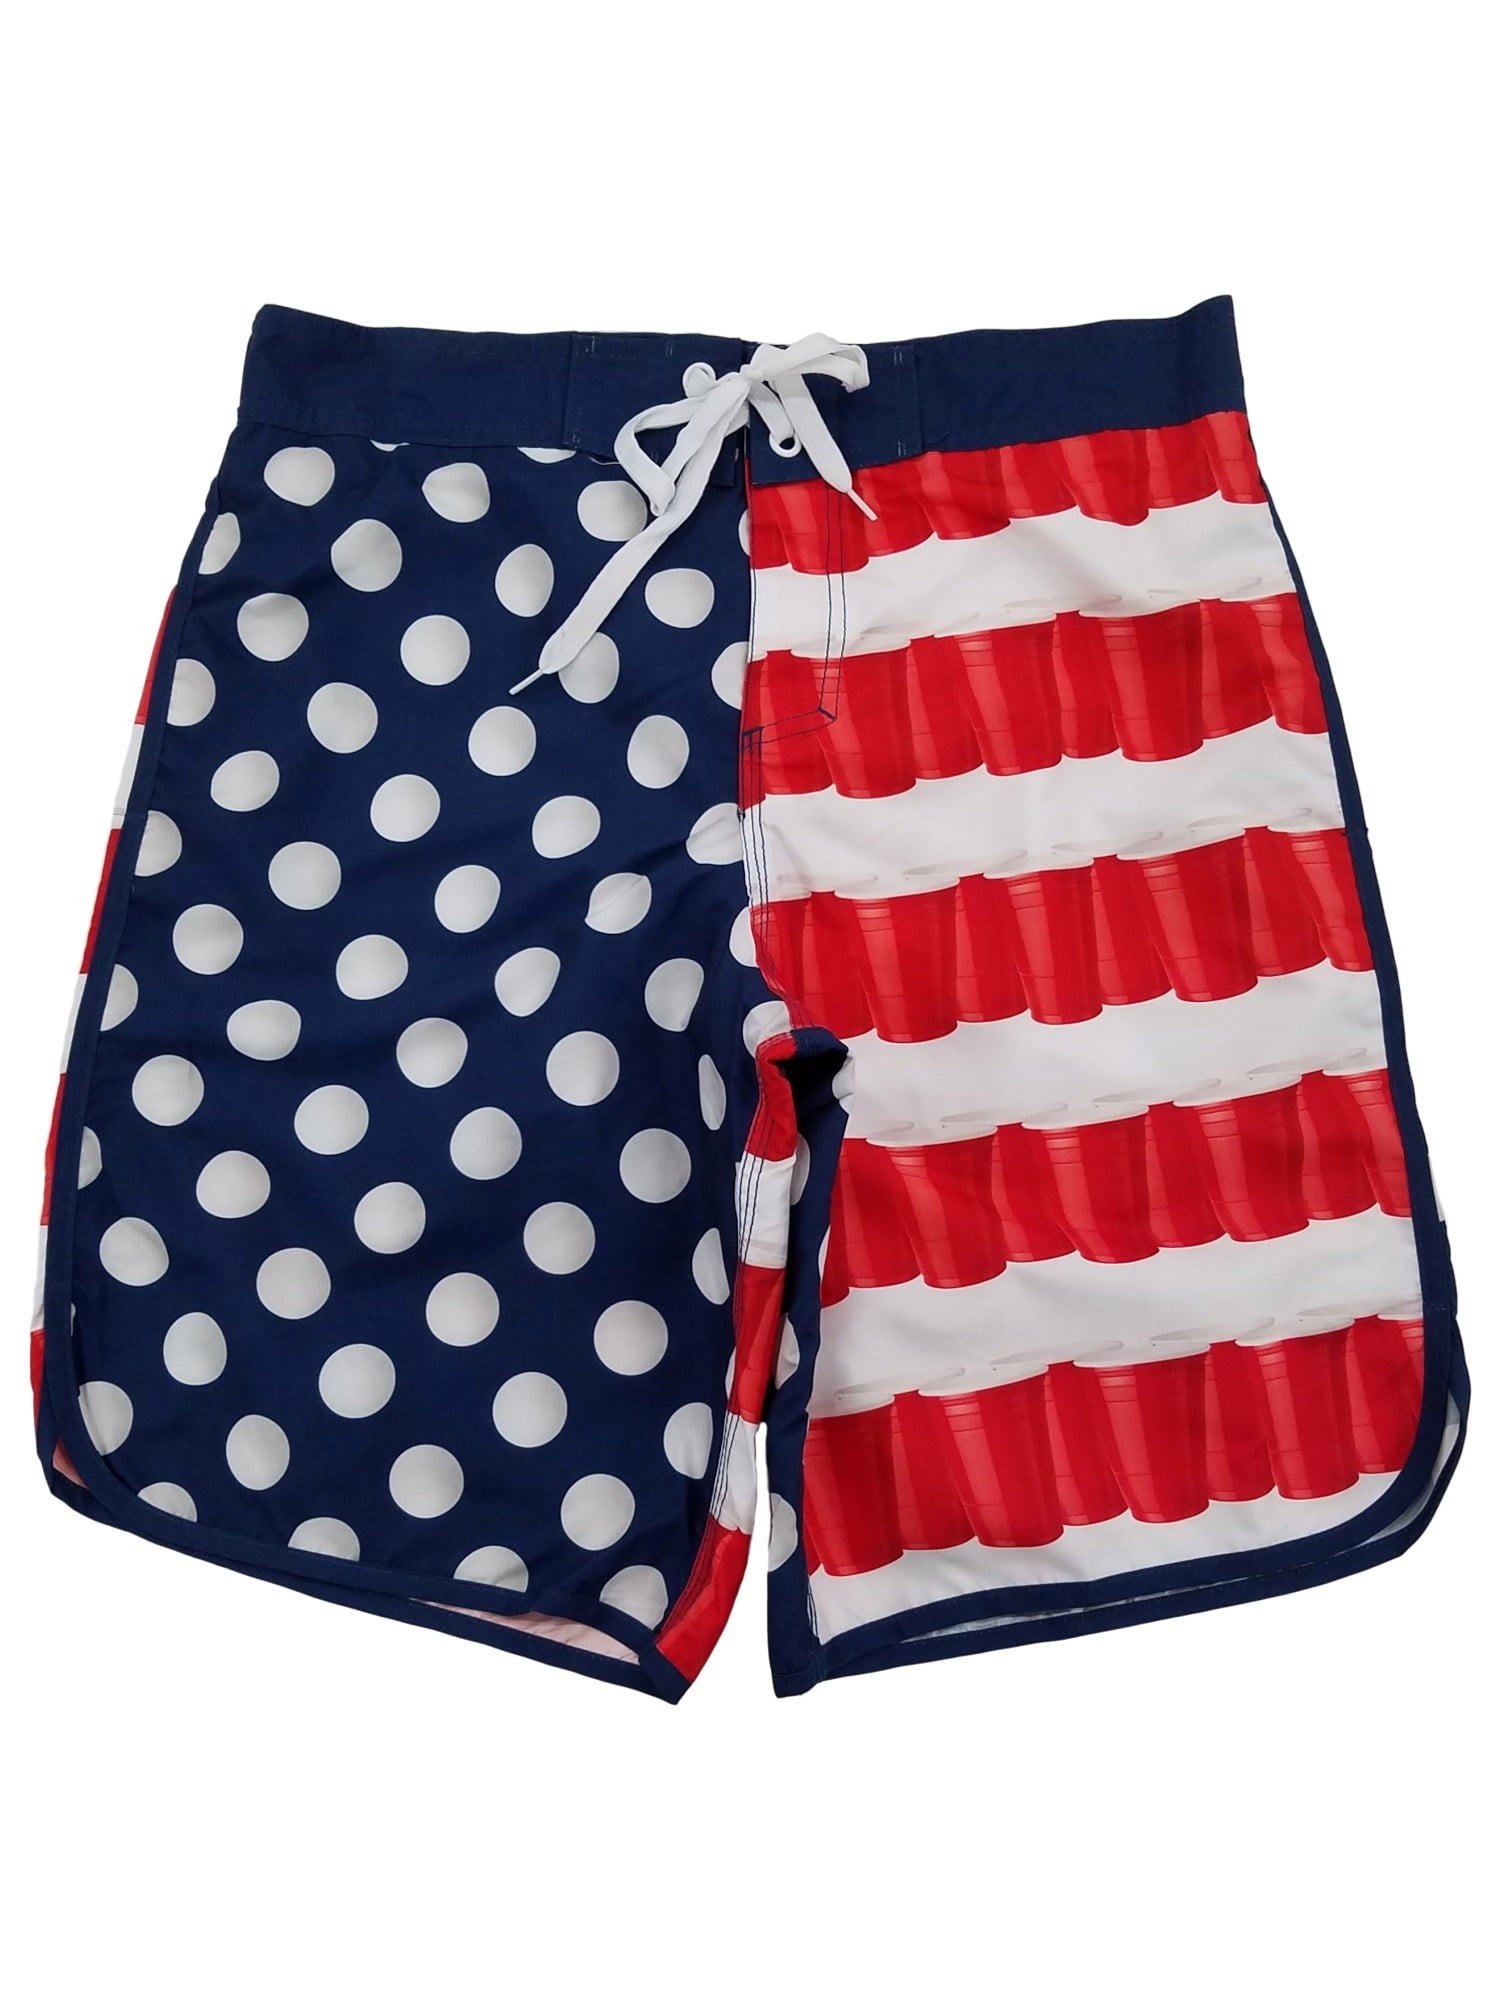 Mens Shorts with Pocket JWJW5-20 Vintage Ohio State America Flag Summer Boardshorts